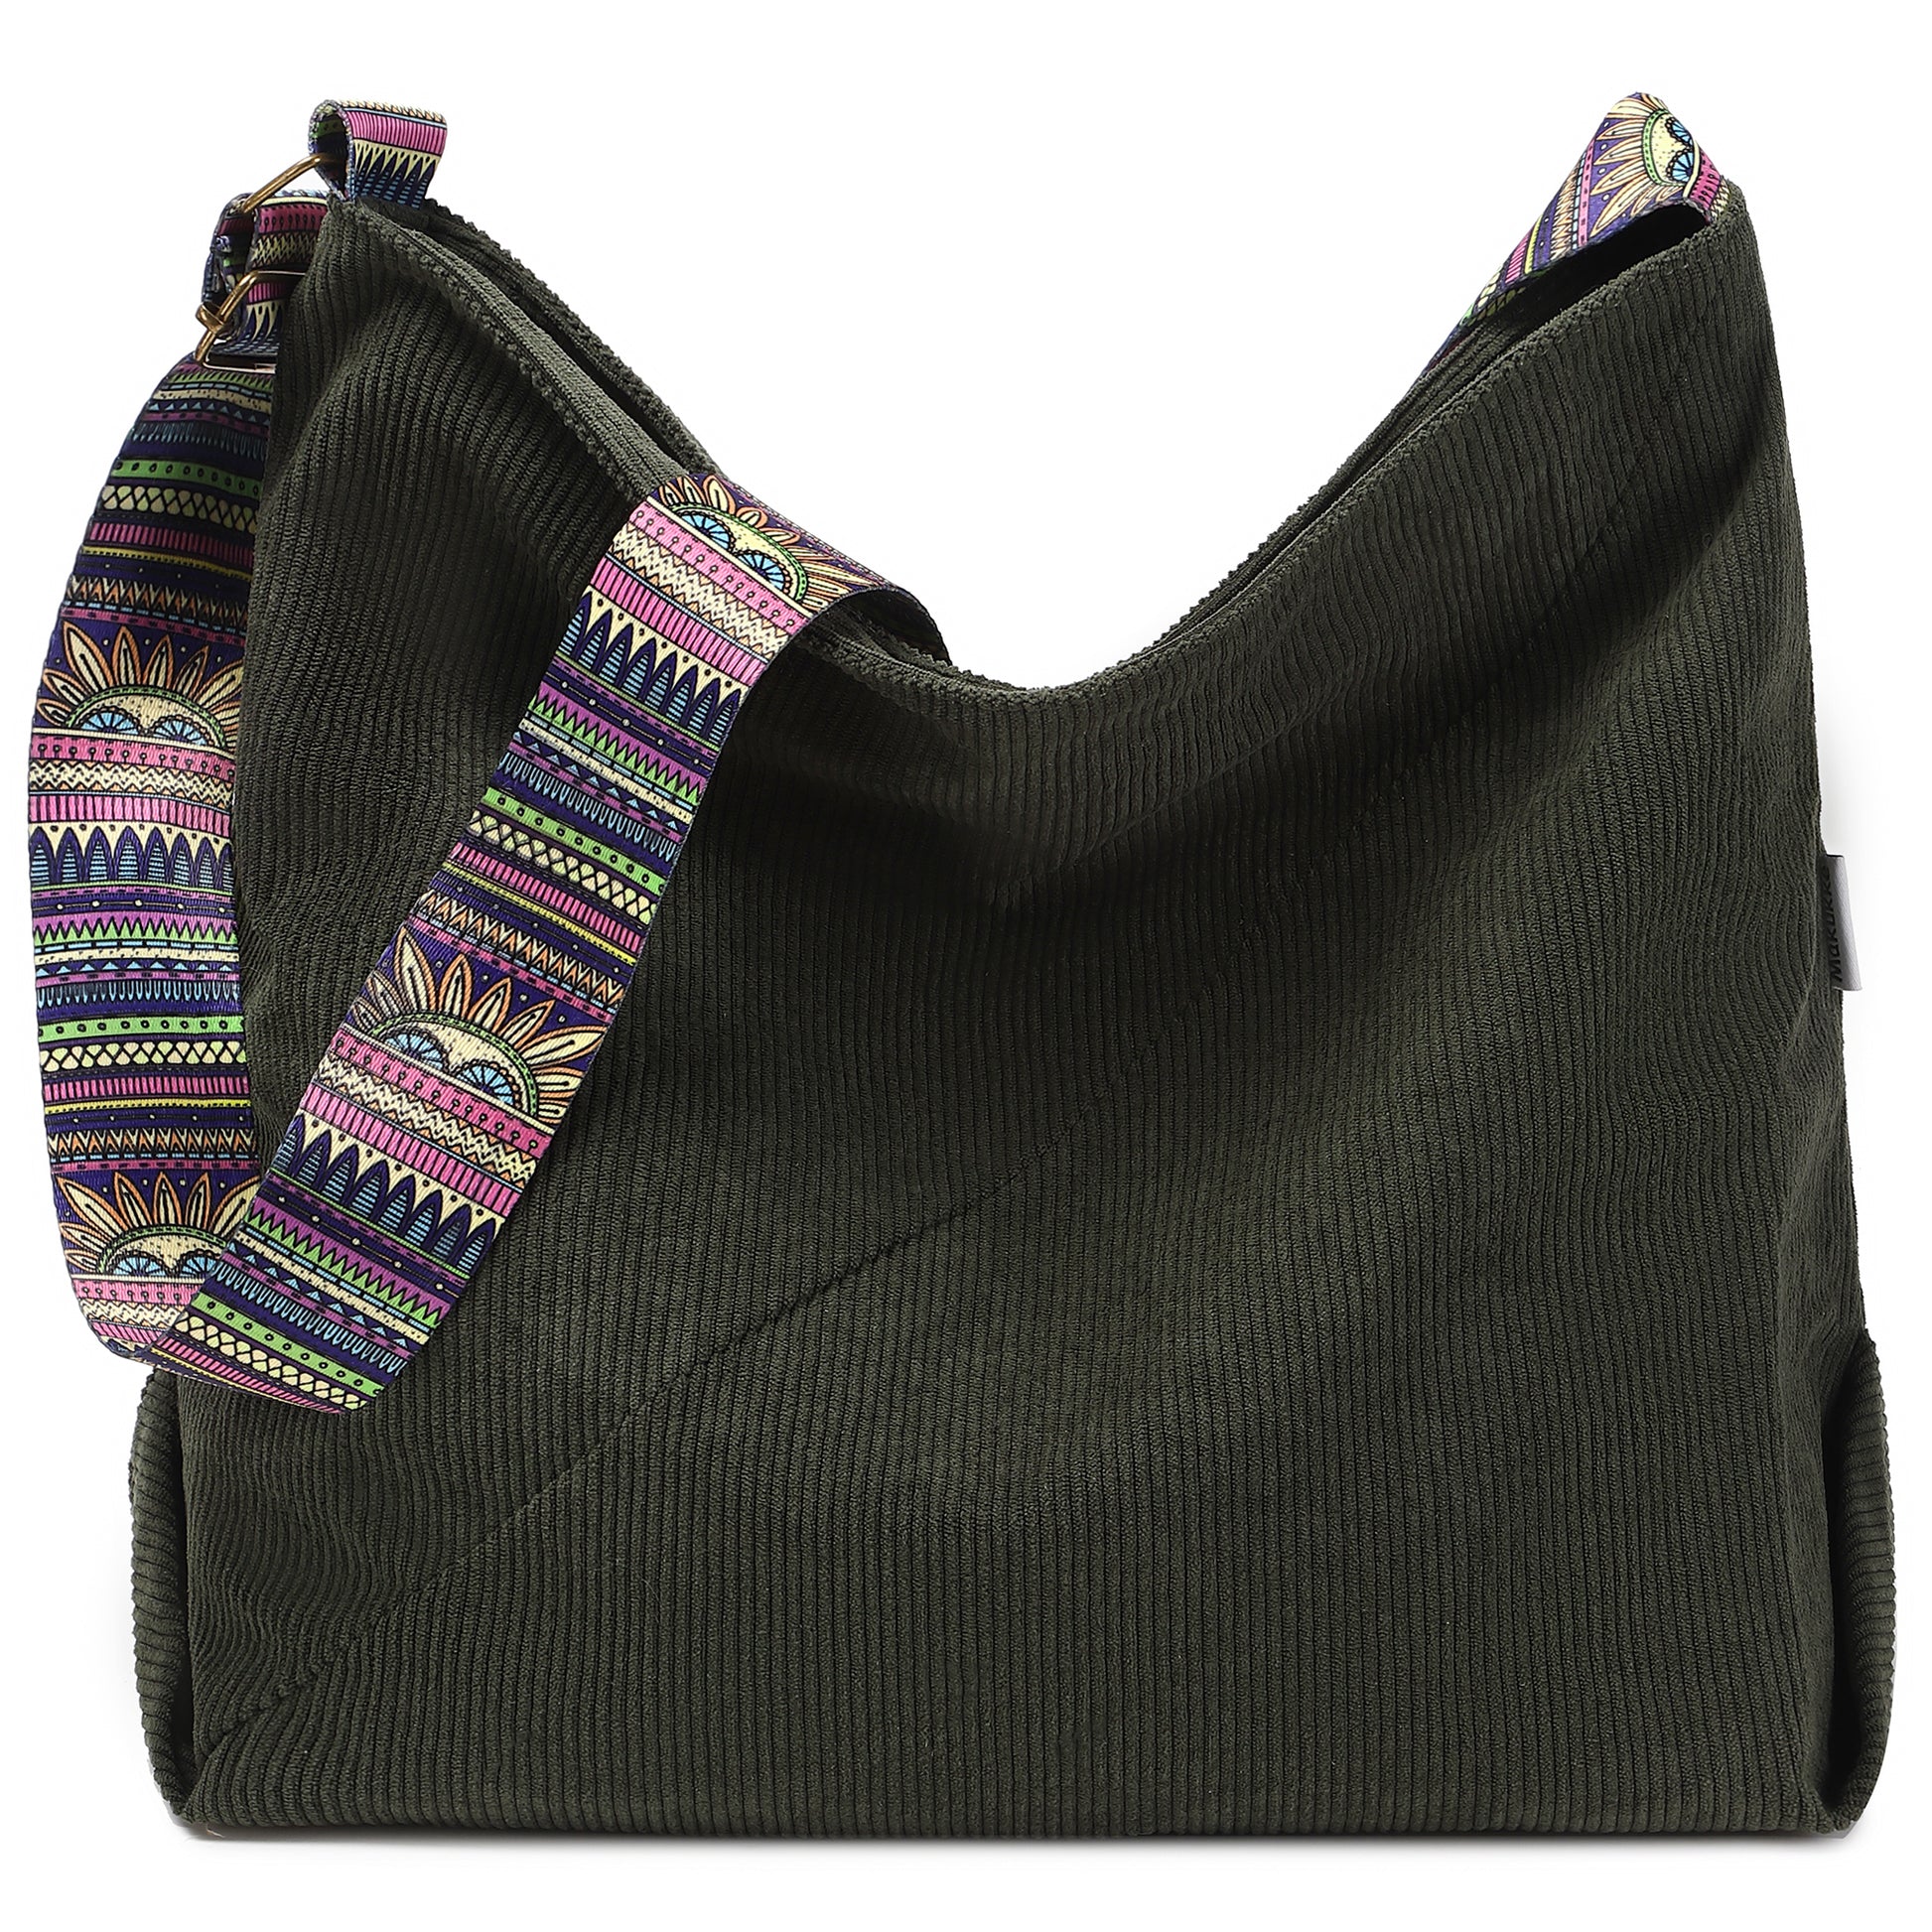 Makukke Corduroy Totes Bag Women - Shoulder Hobo Bag Handbags Crossbody Bag  Big Capacity Shopping Purses